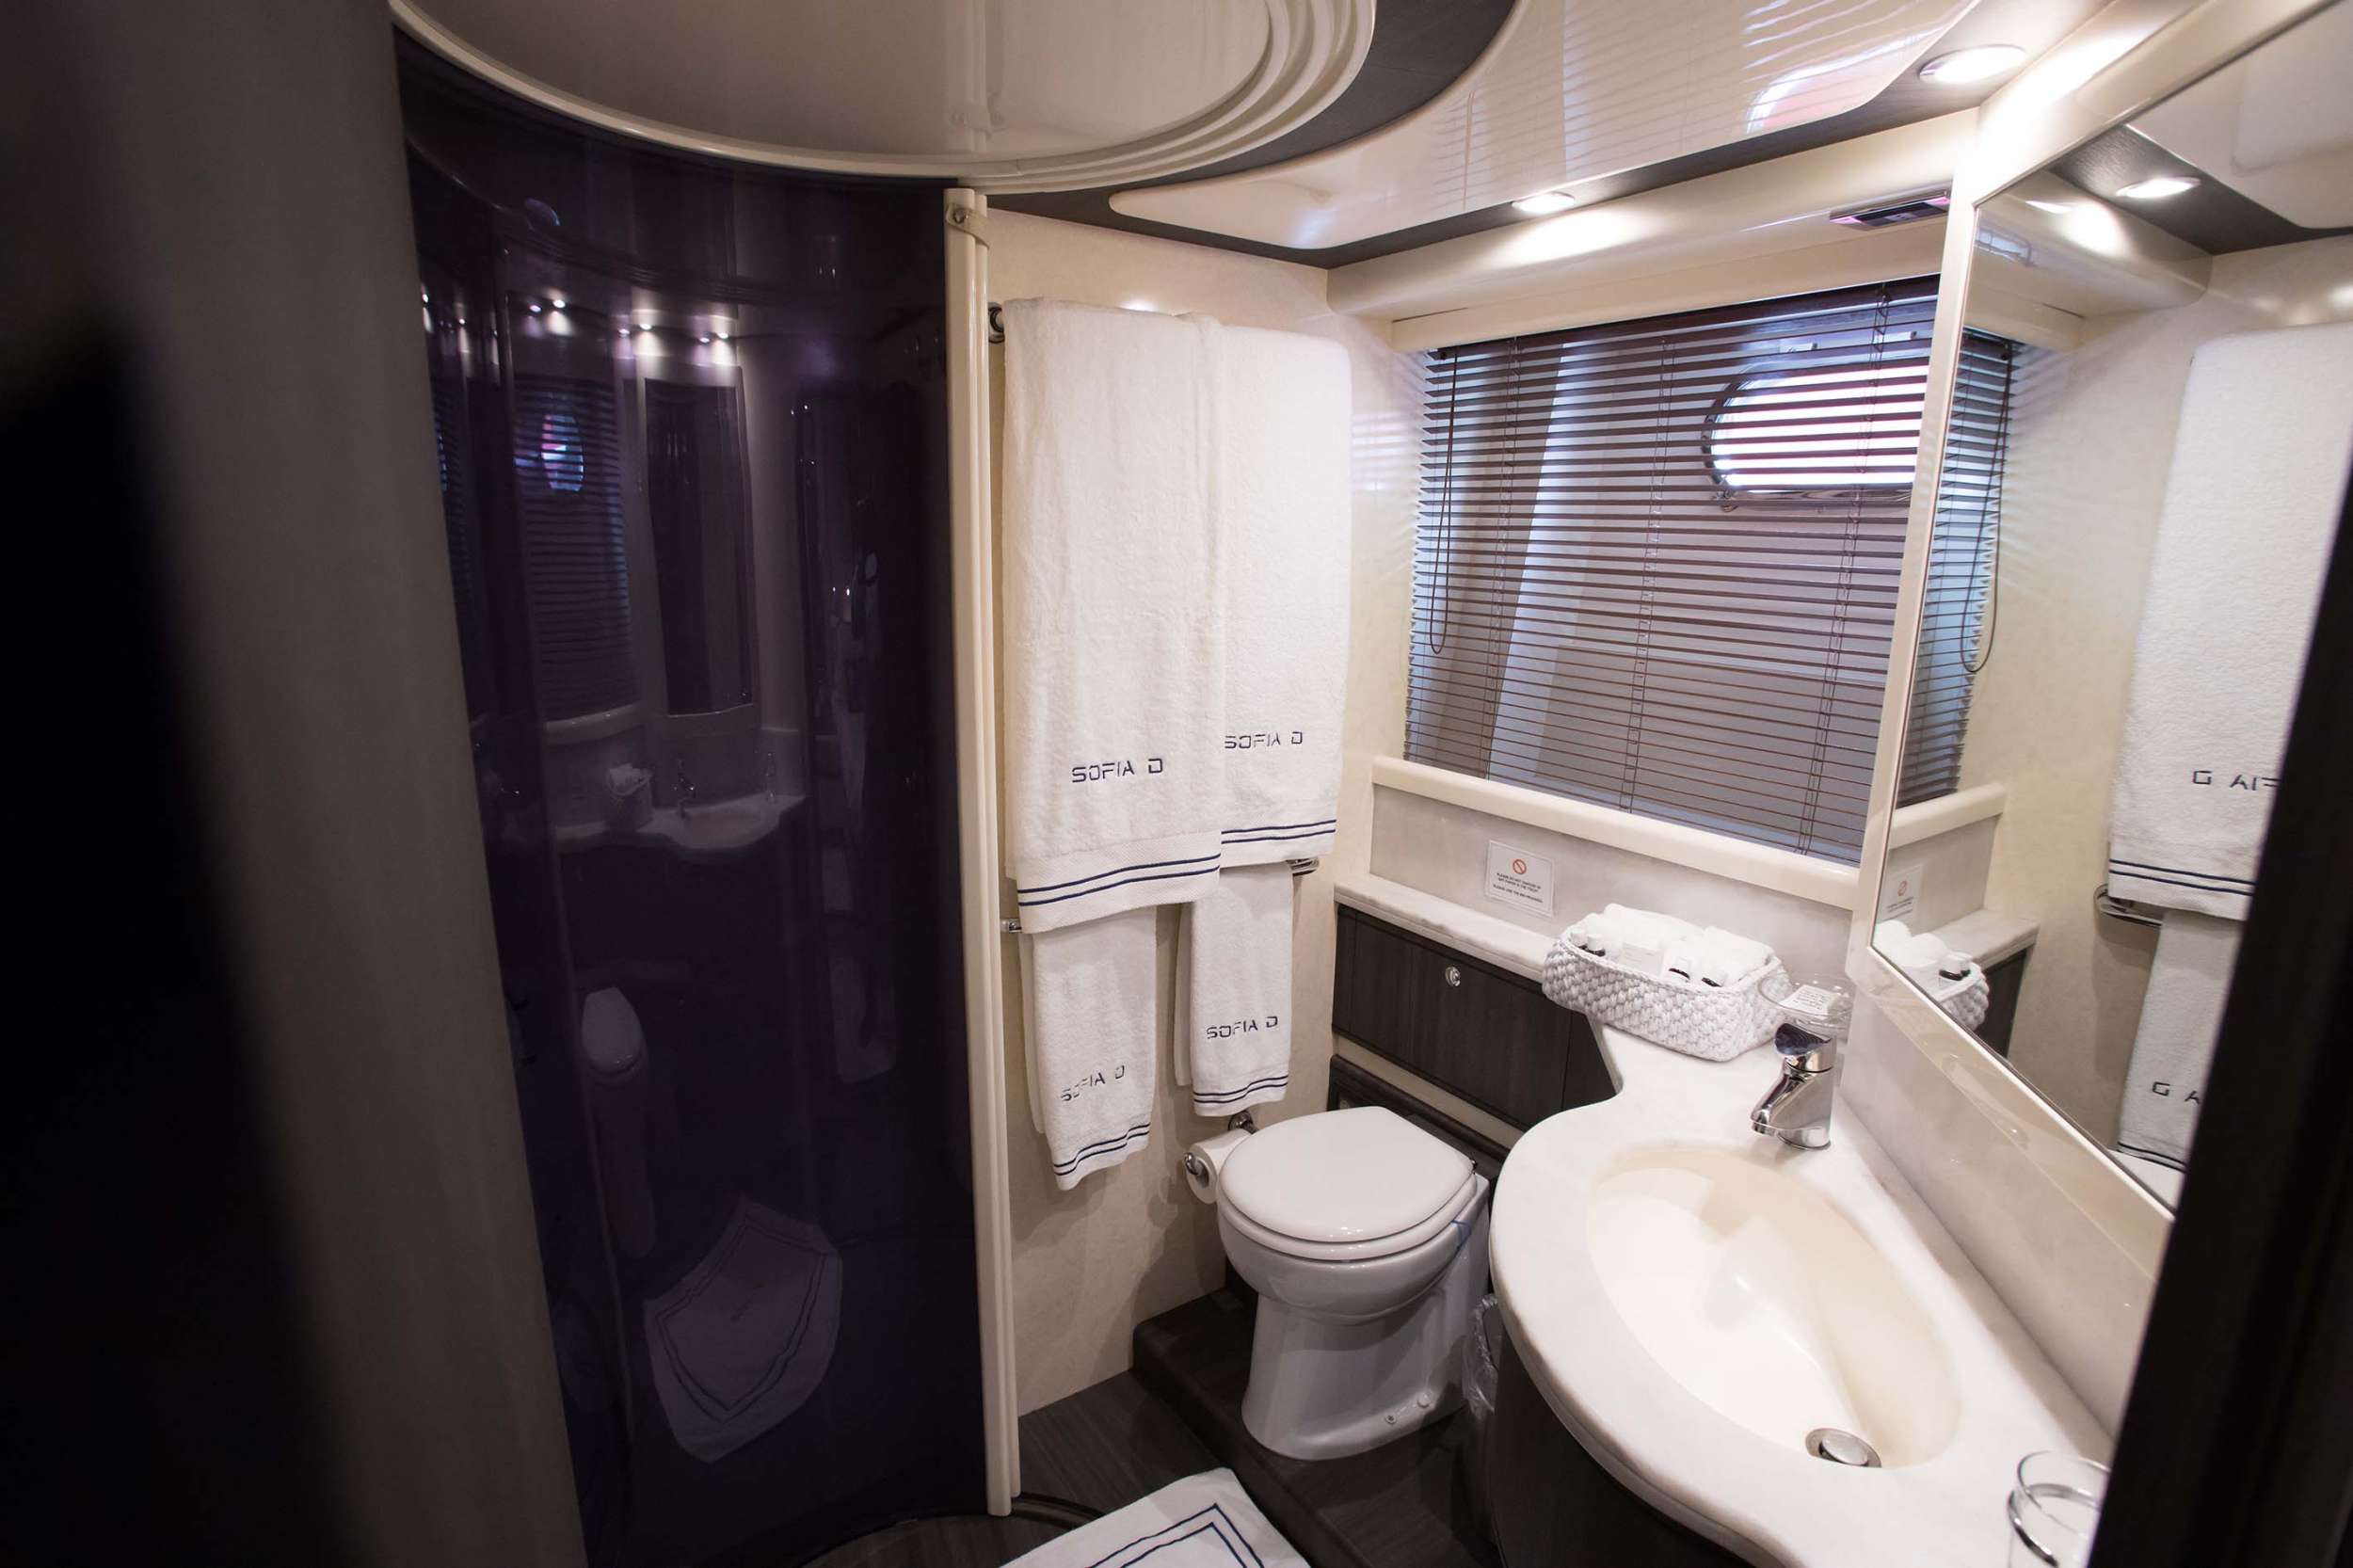 SOFIA D Yacht Charter - VIP cabin en-suite facilities